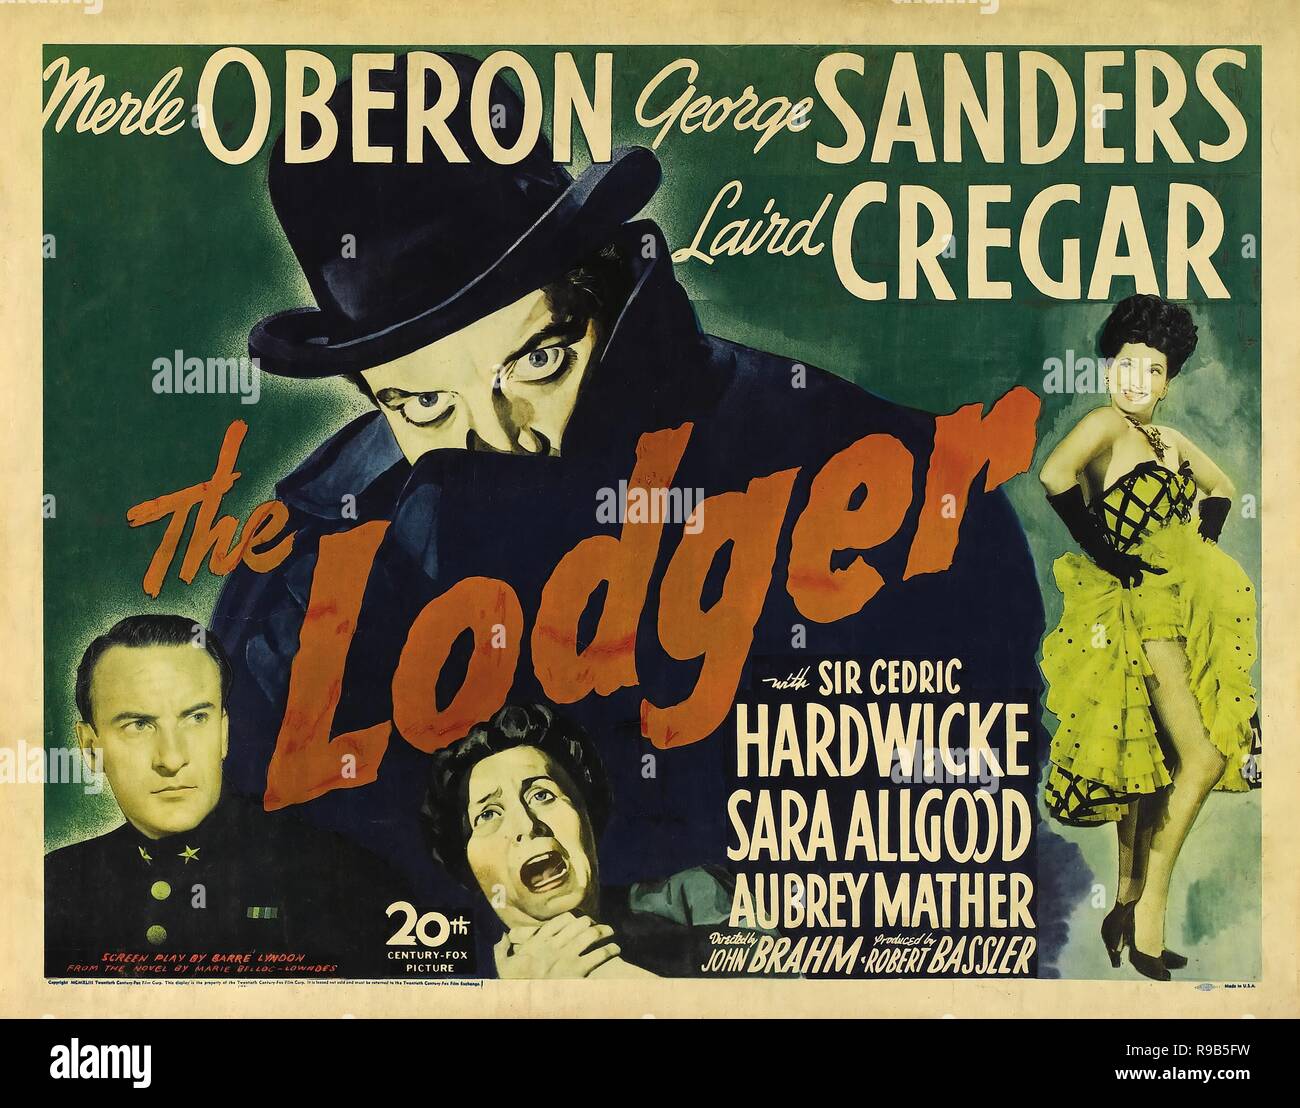 Original film title: THE LODGER. English title: THE LODGER. Year: 1944. Director: JOHN BRAHM. Credit: 20TH CENTURY FOX / Album Stock Photo